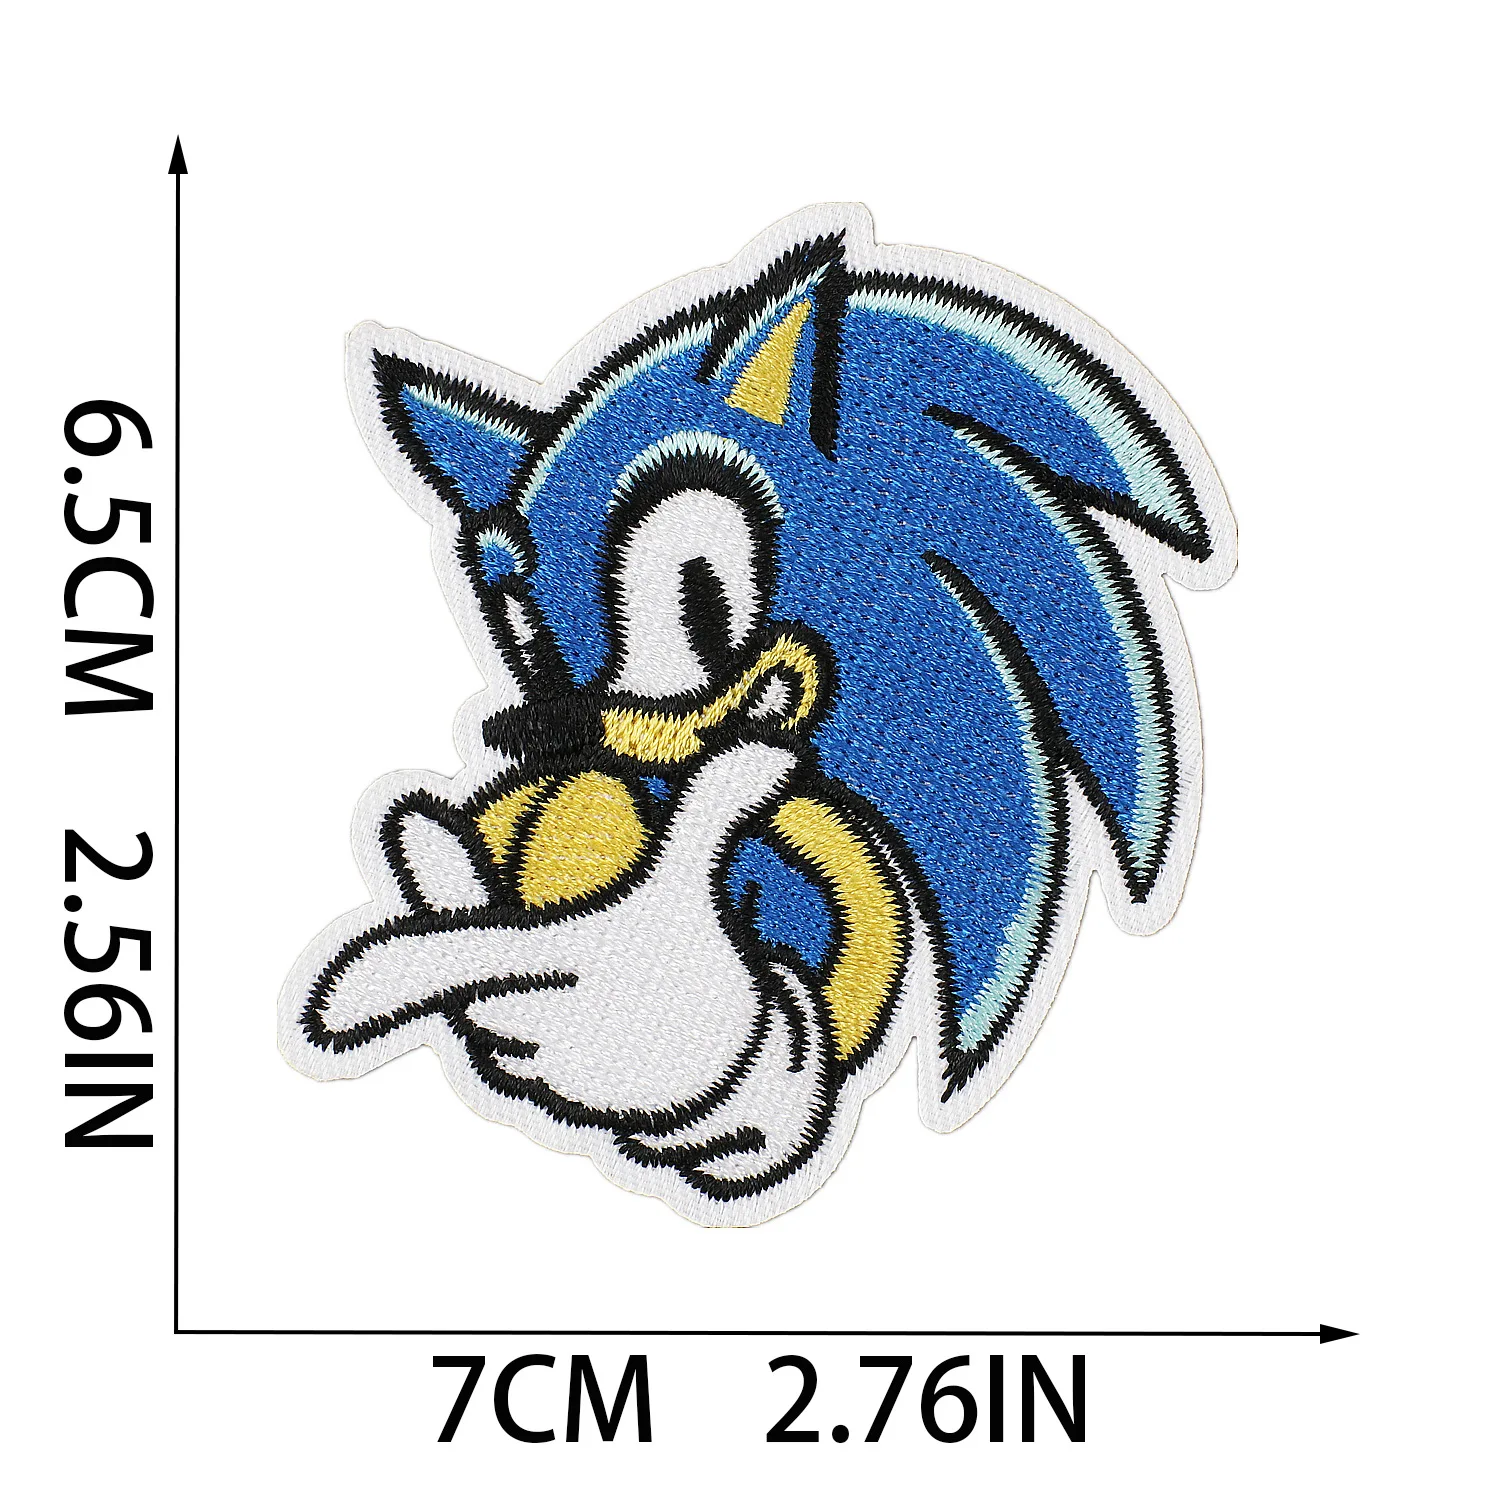 S2149155013634c33b84ce4acc788c663j - Sonic Merch Store